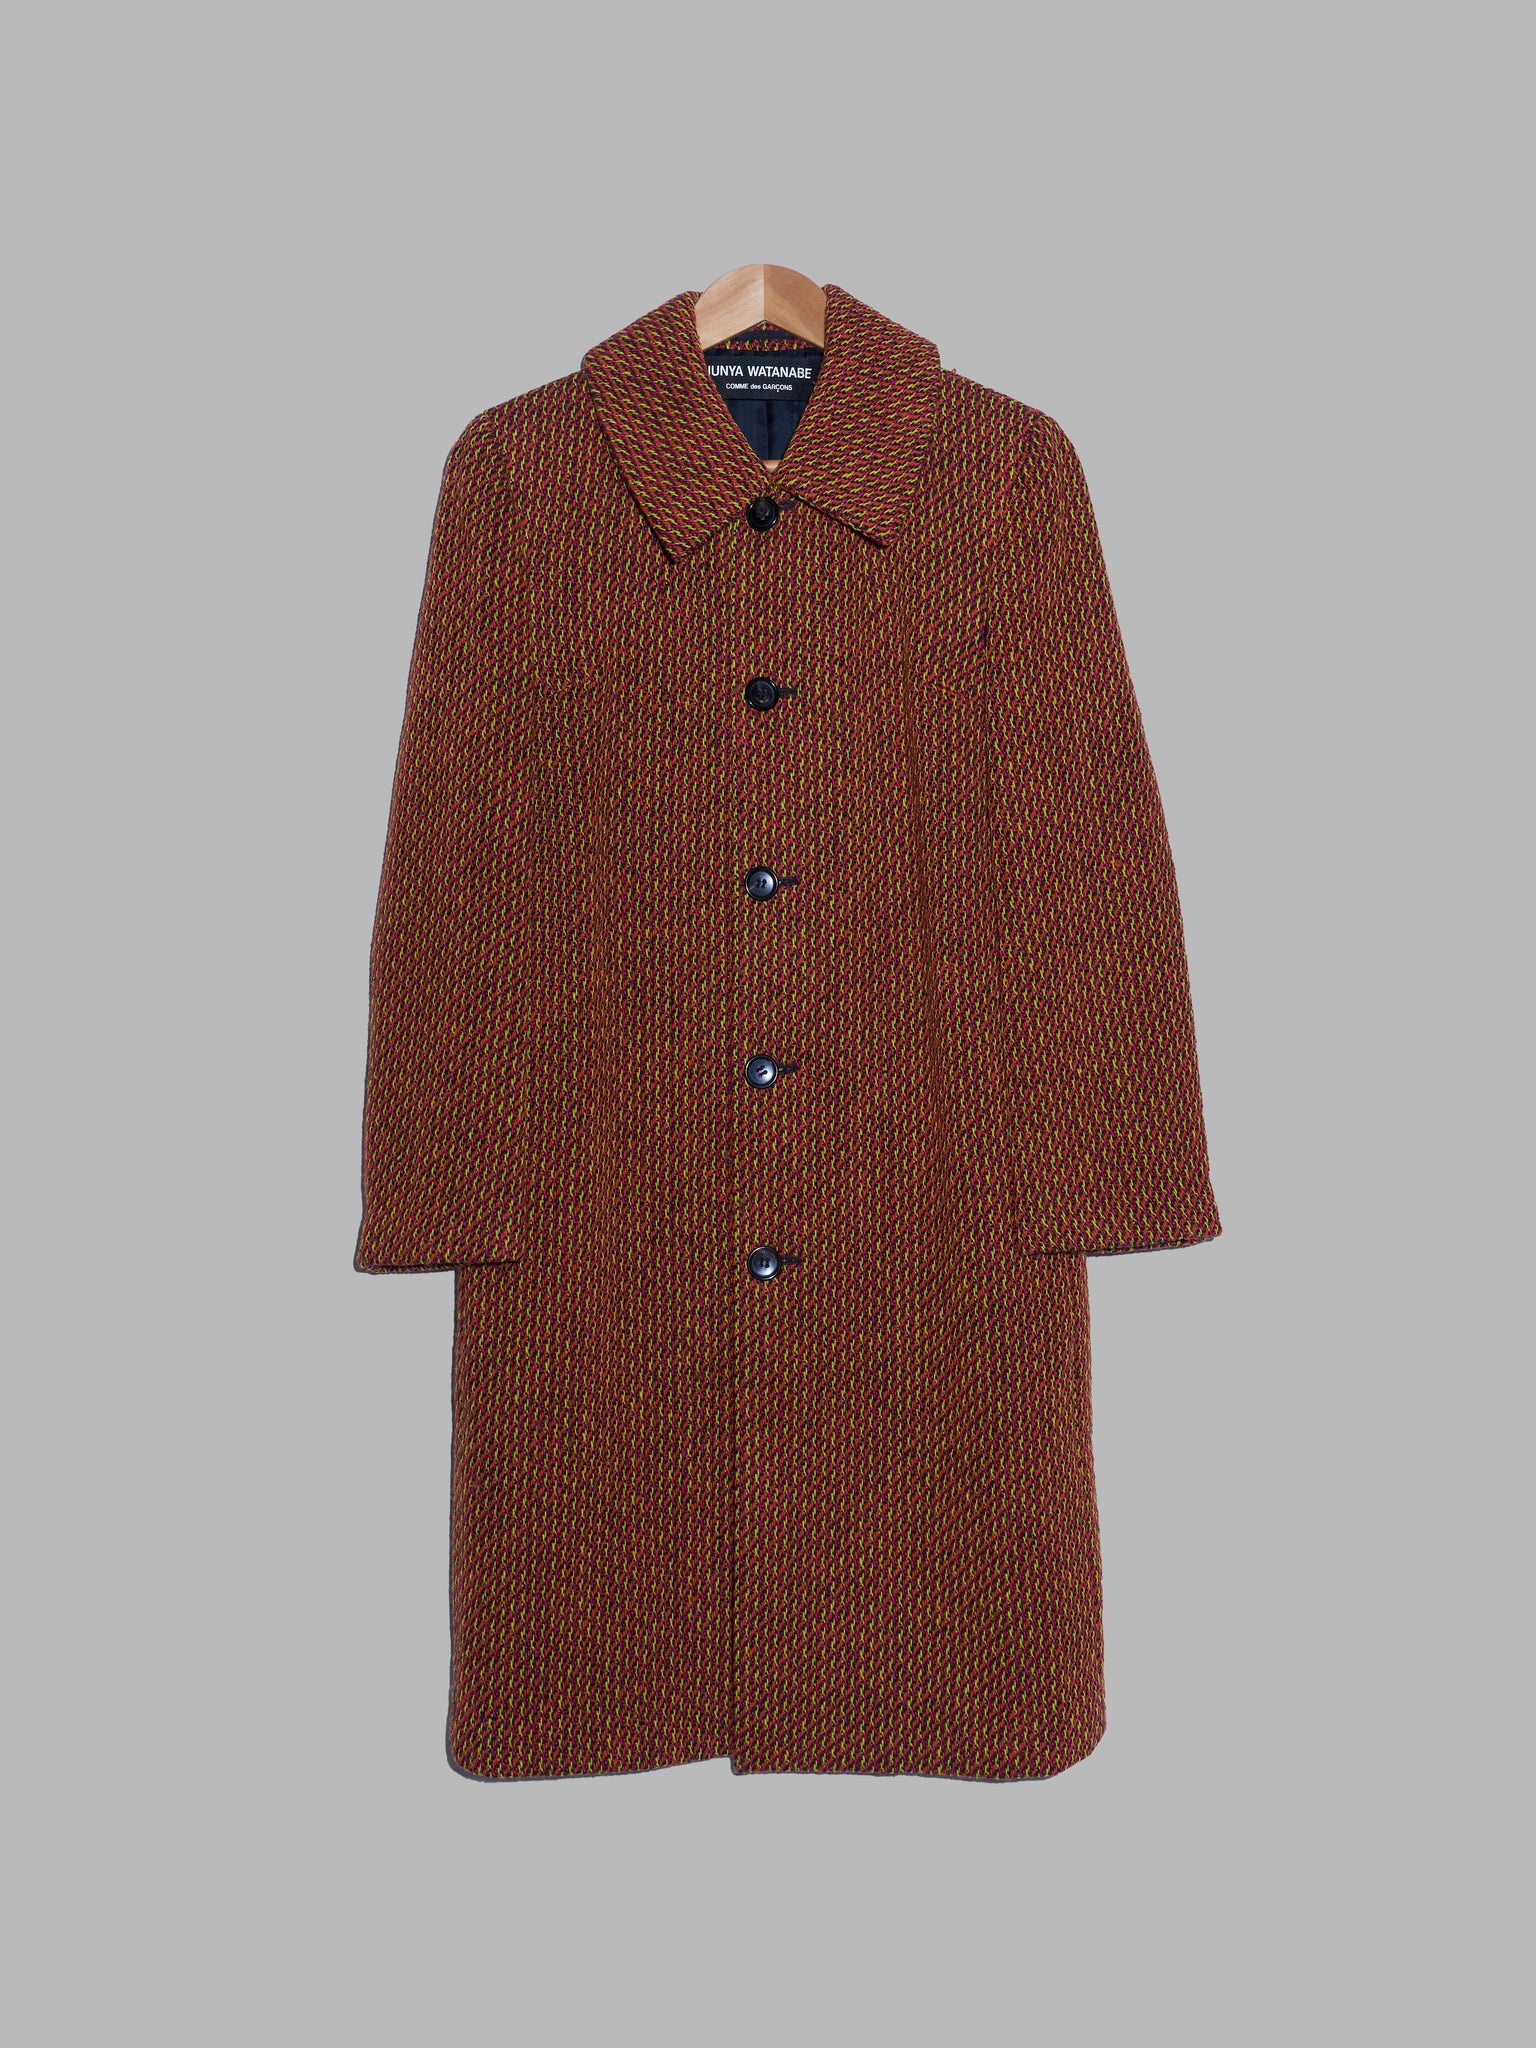 Junya Watanabe Comme des Garcons AW1997 orange wool coat with underarm gusset